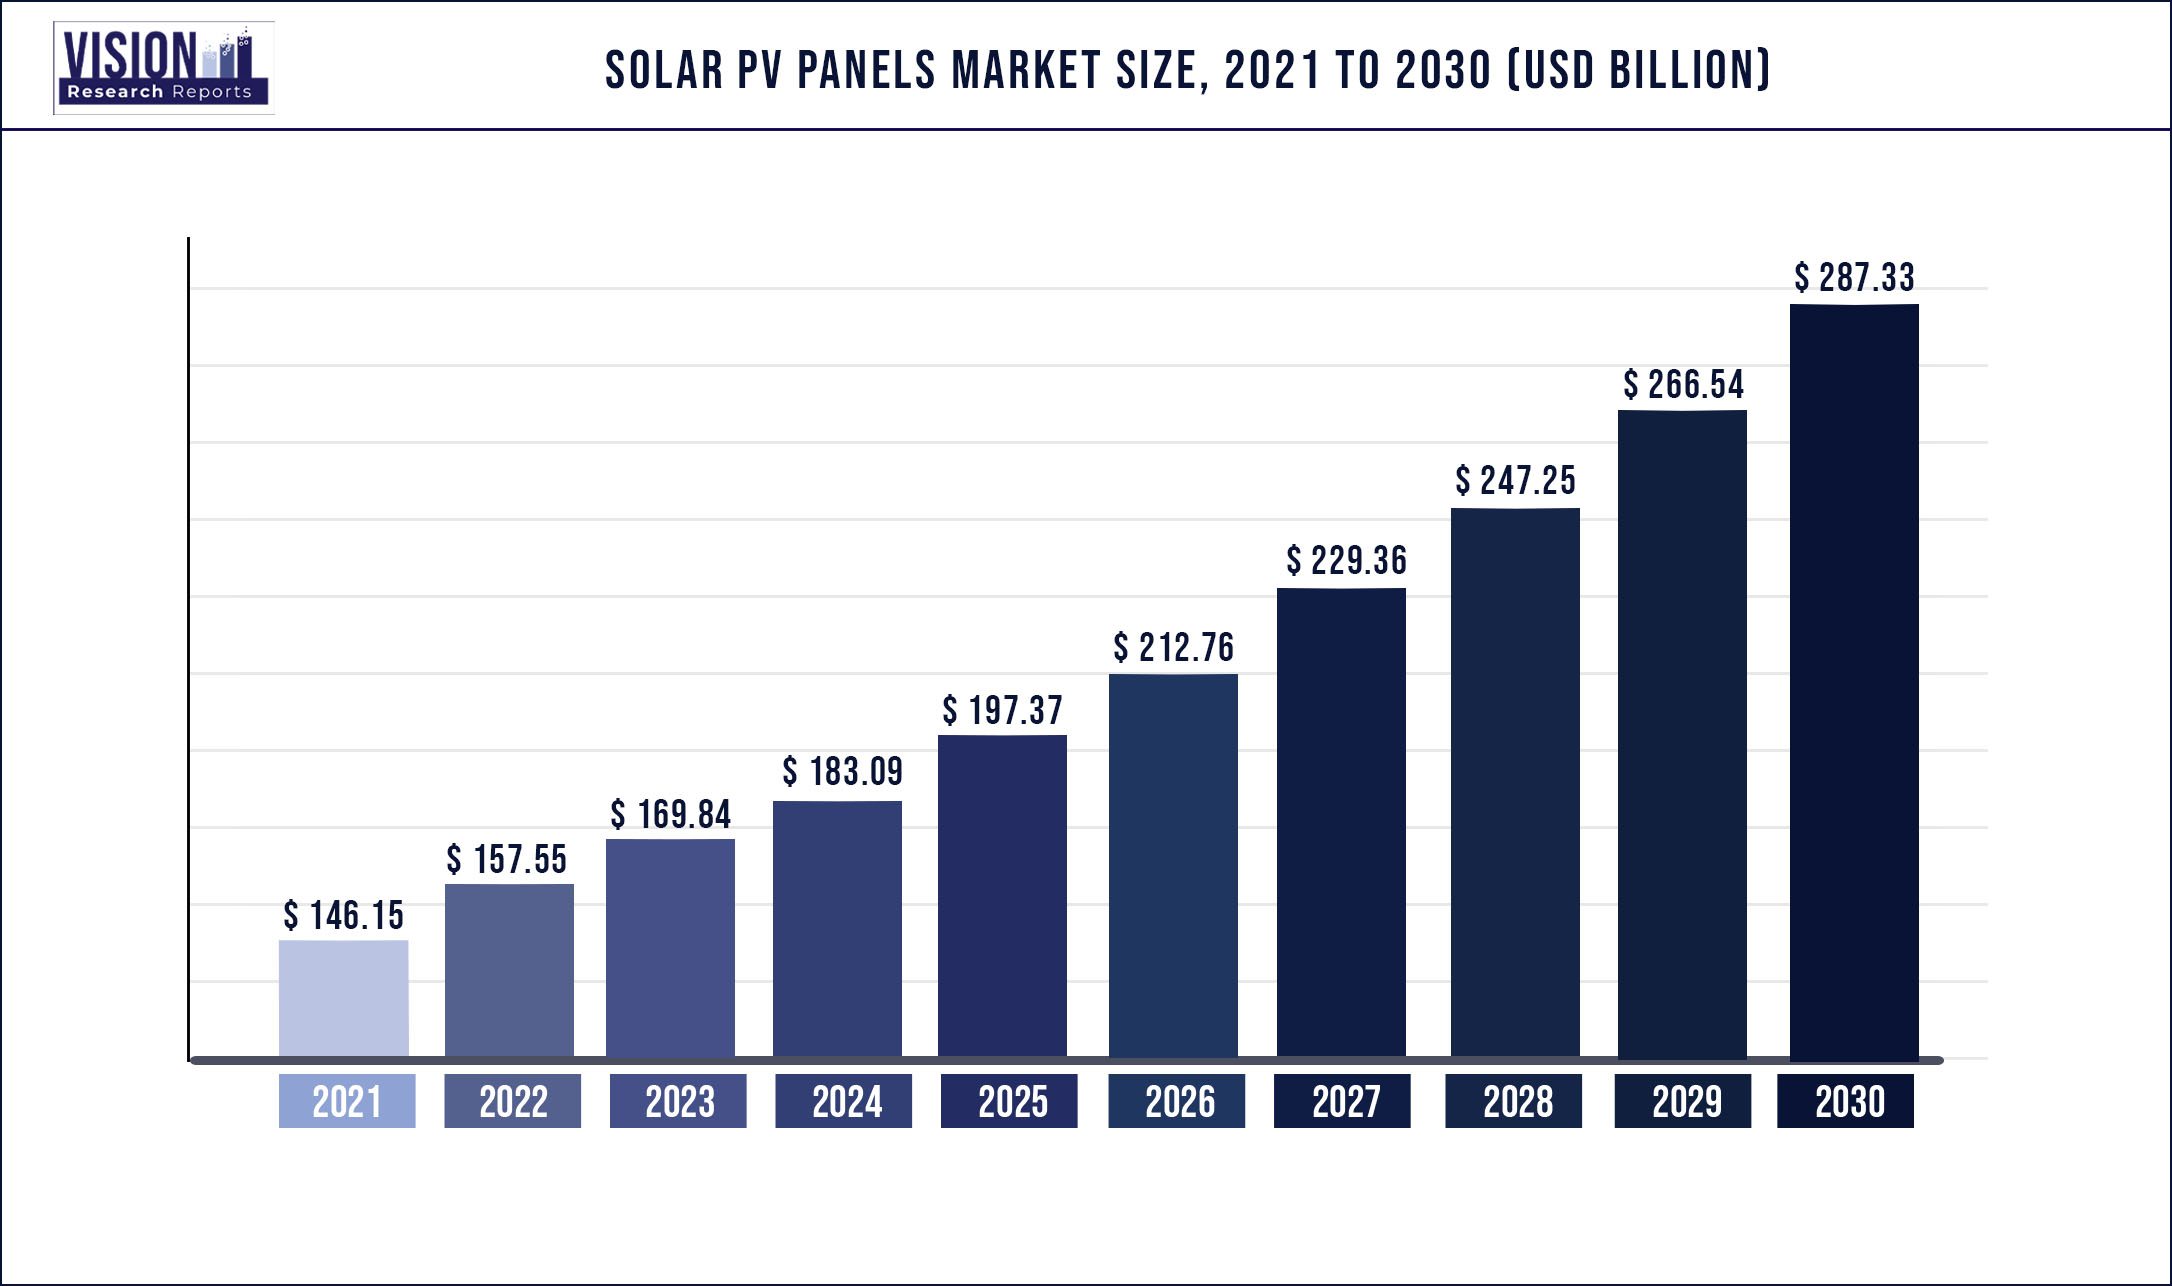 Solar PV Panels Market Size 2021 to 2030